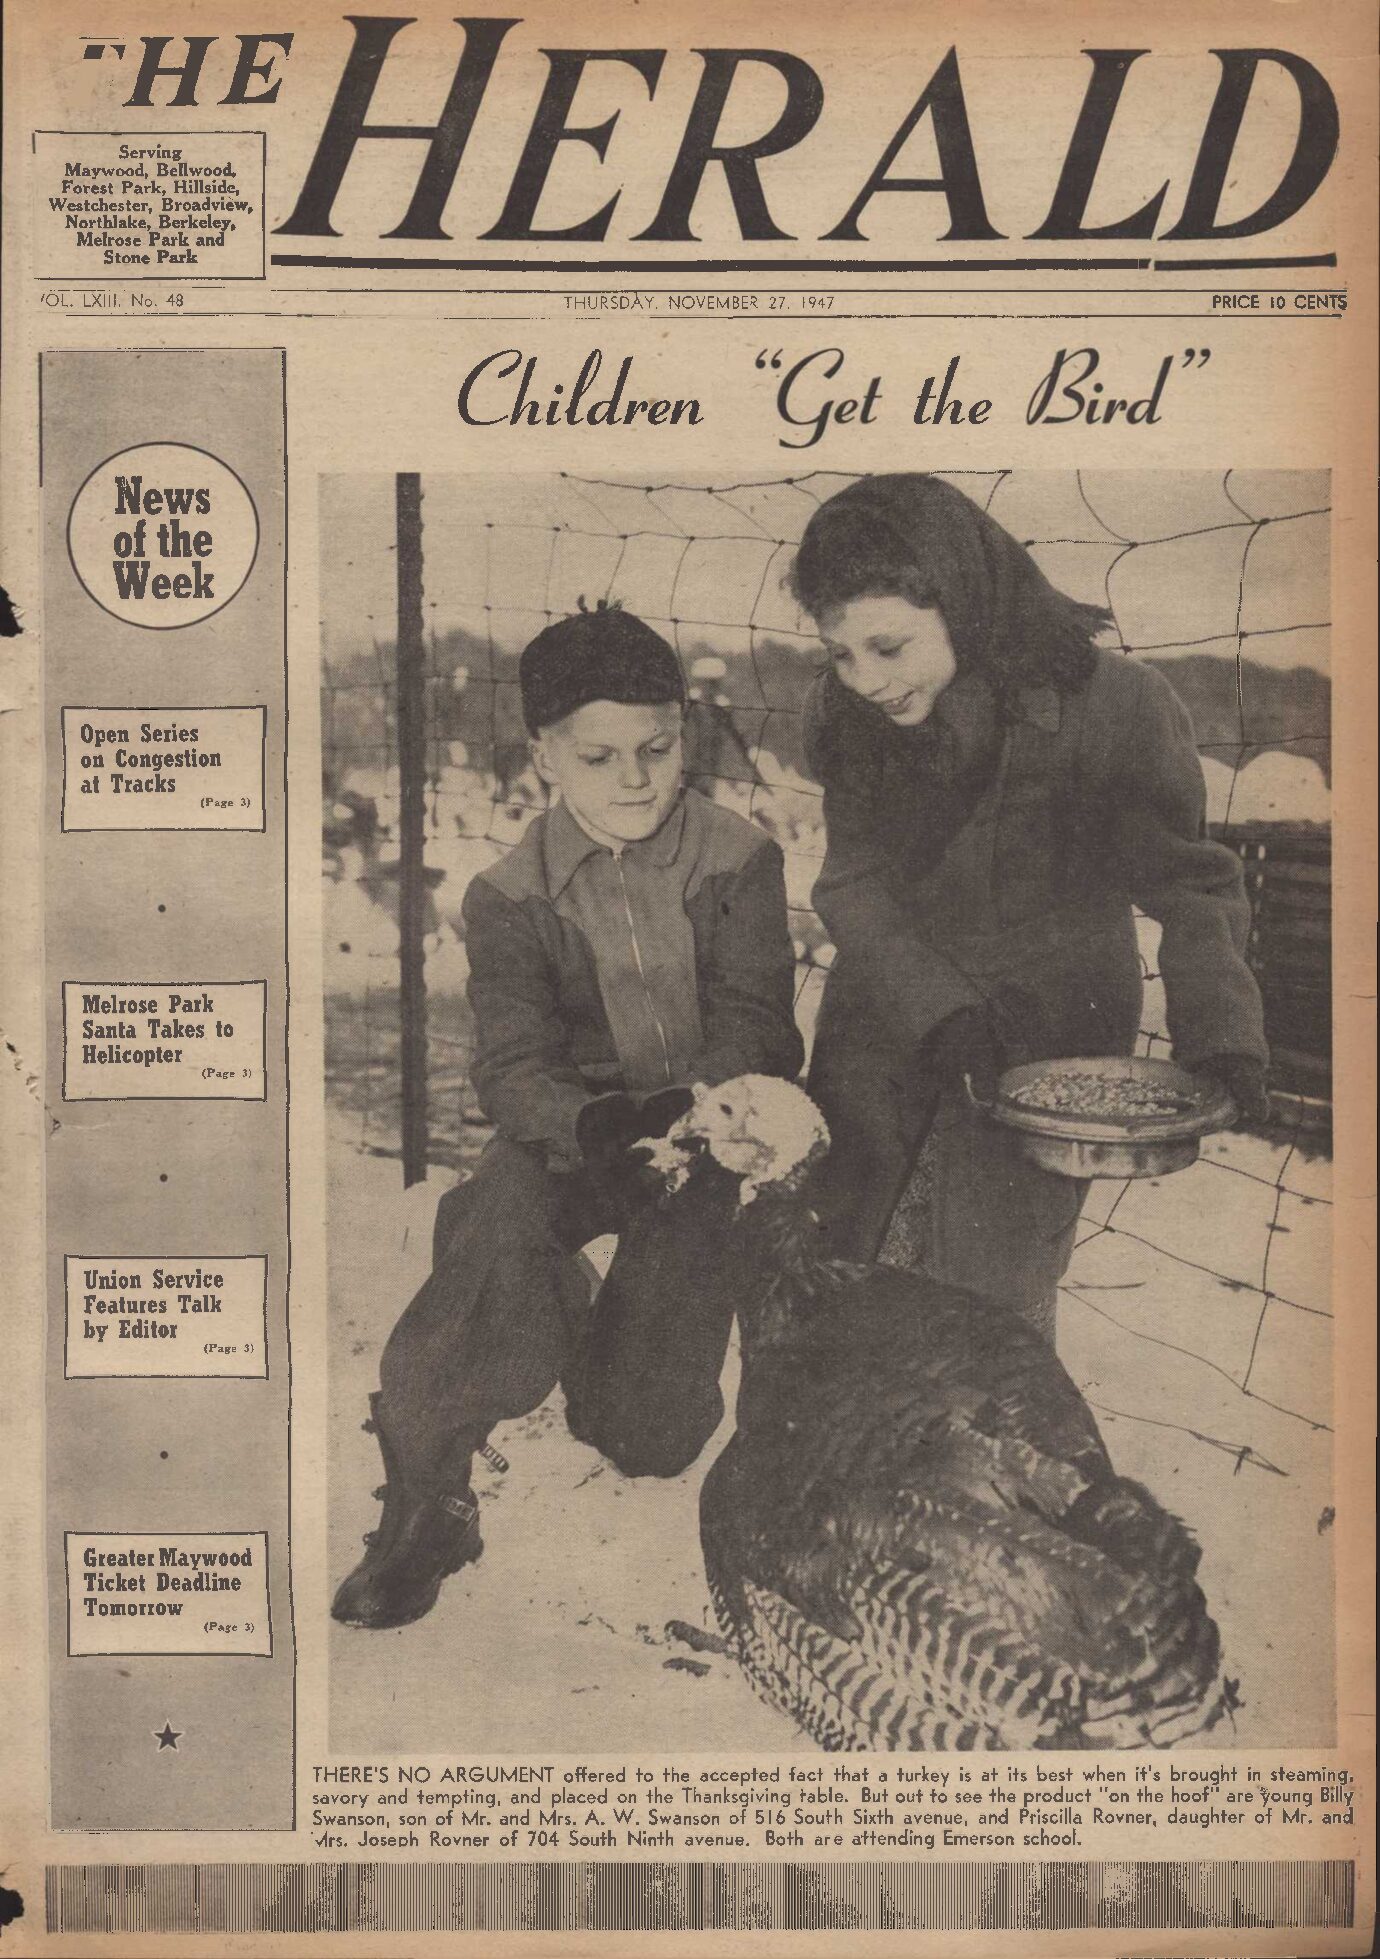 The Herald – 19471127